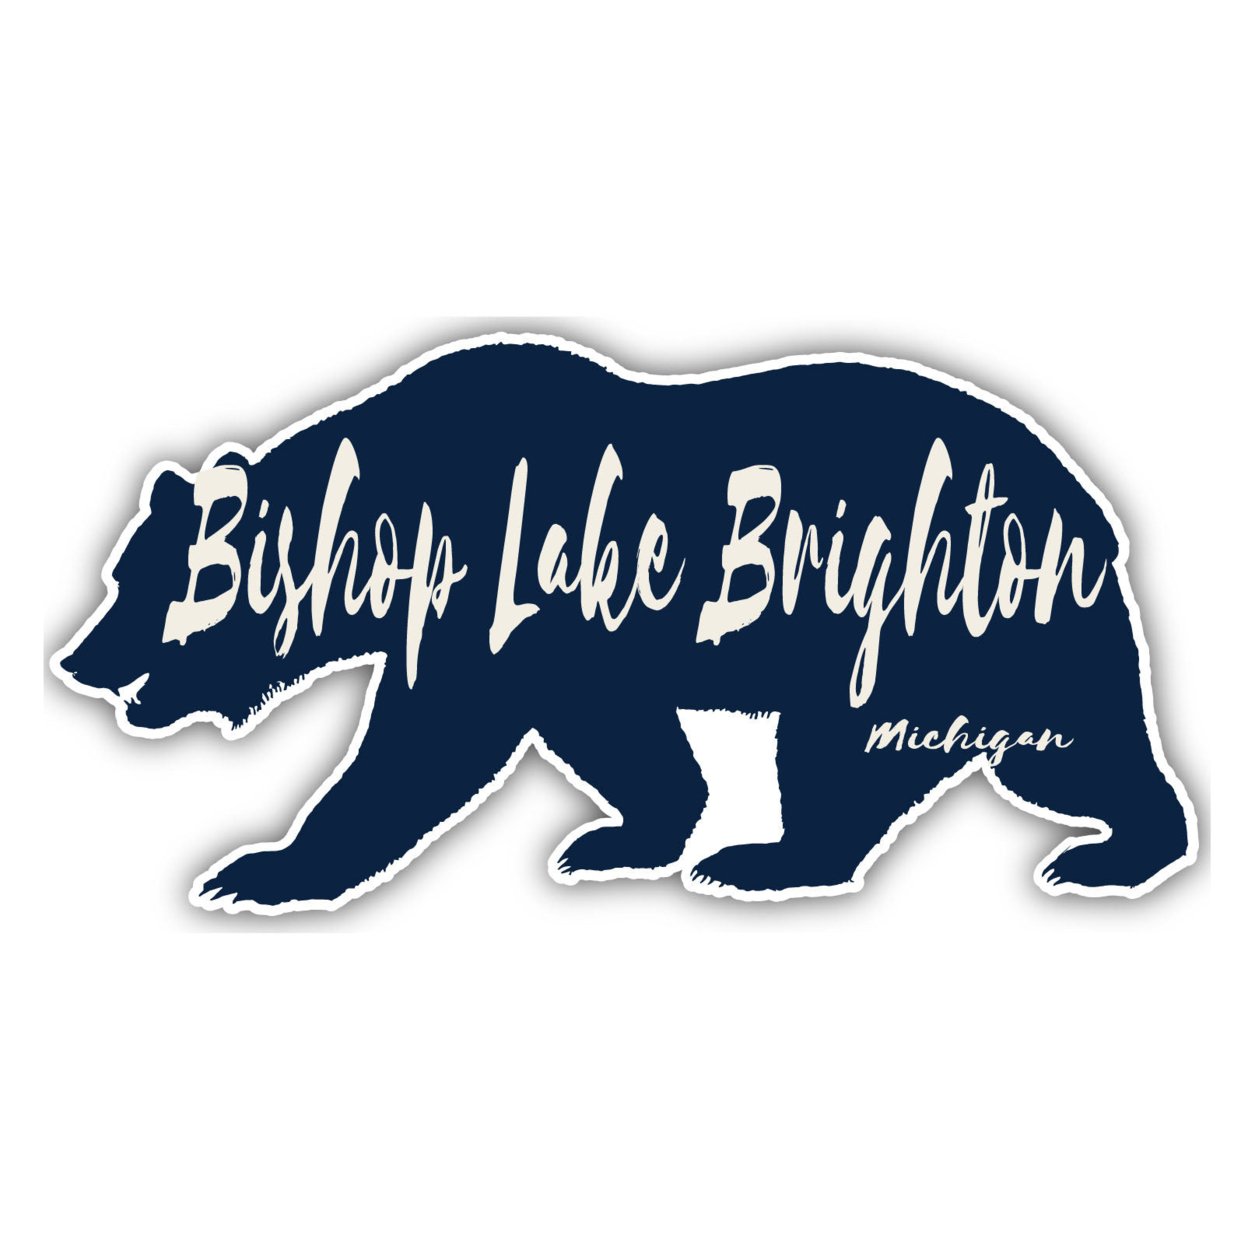 Bishop Lake Brighton Michigan Souvenir Decorative Stickers (Choose Theme And Size) - Single Unit, 8-Inch, Bear